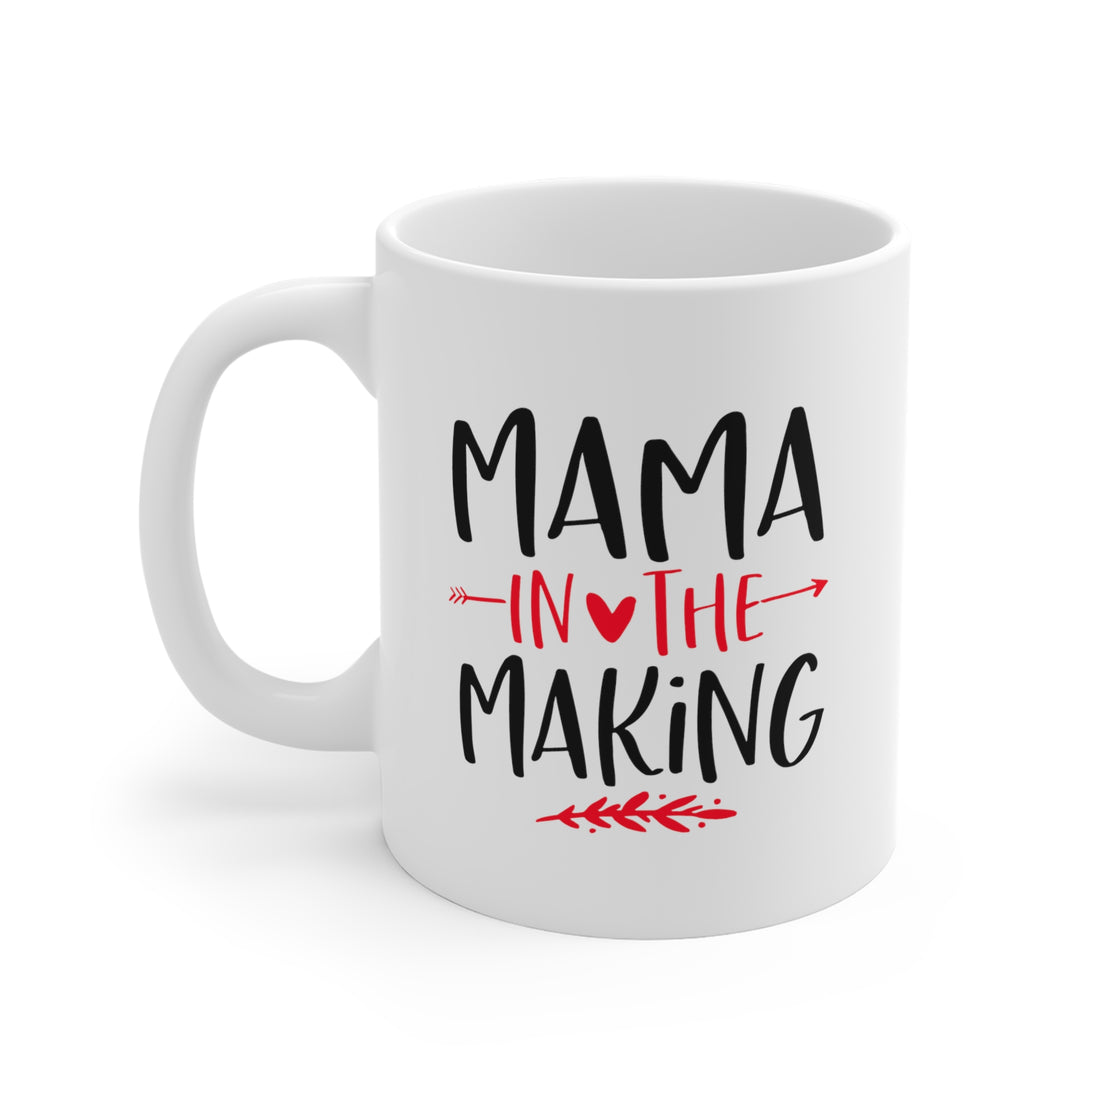 Mama In The Making - White Ceramic Mug 2 sizes Available